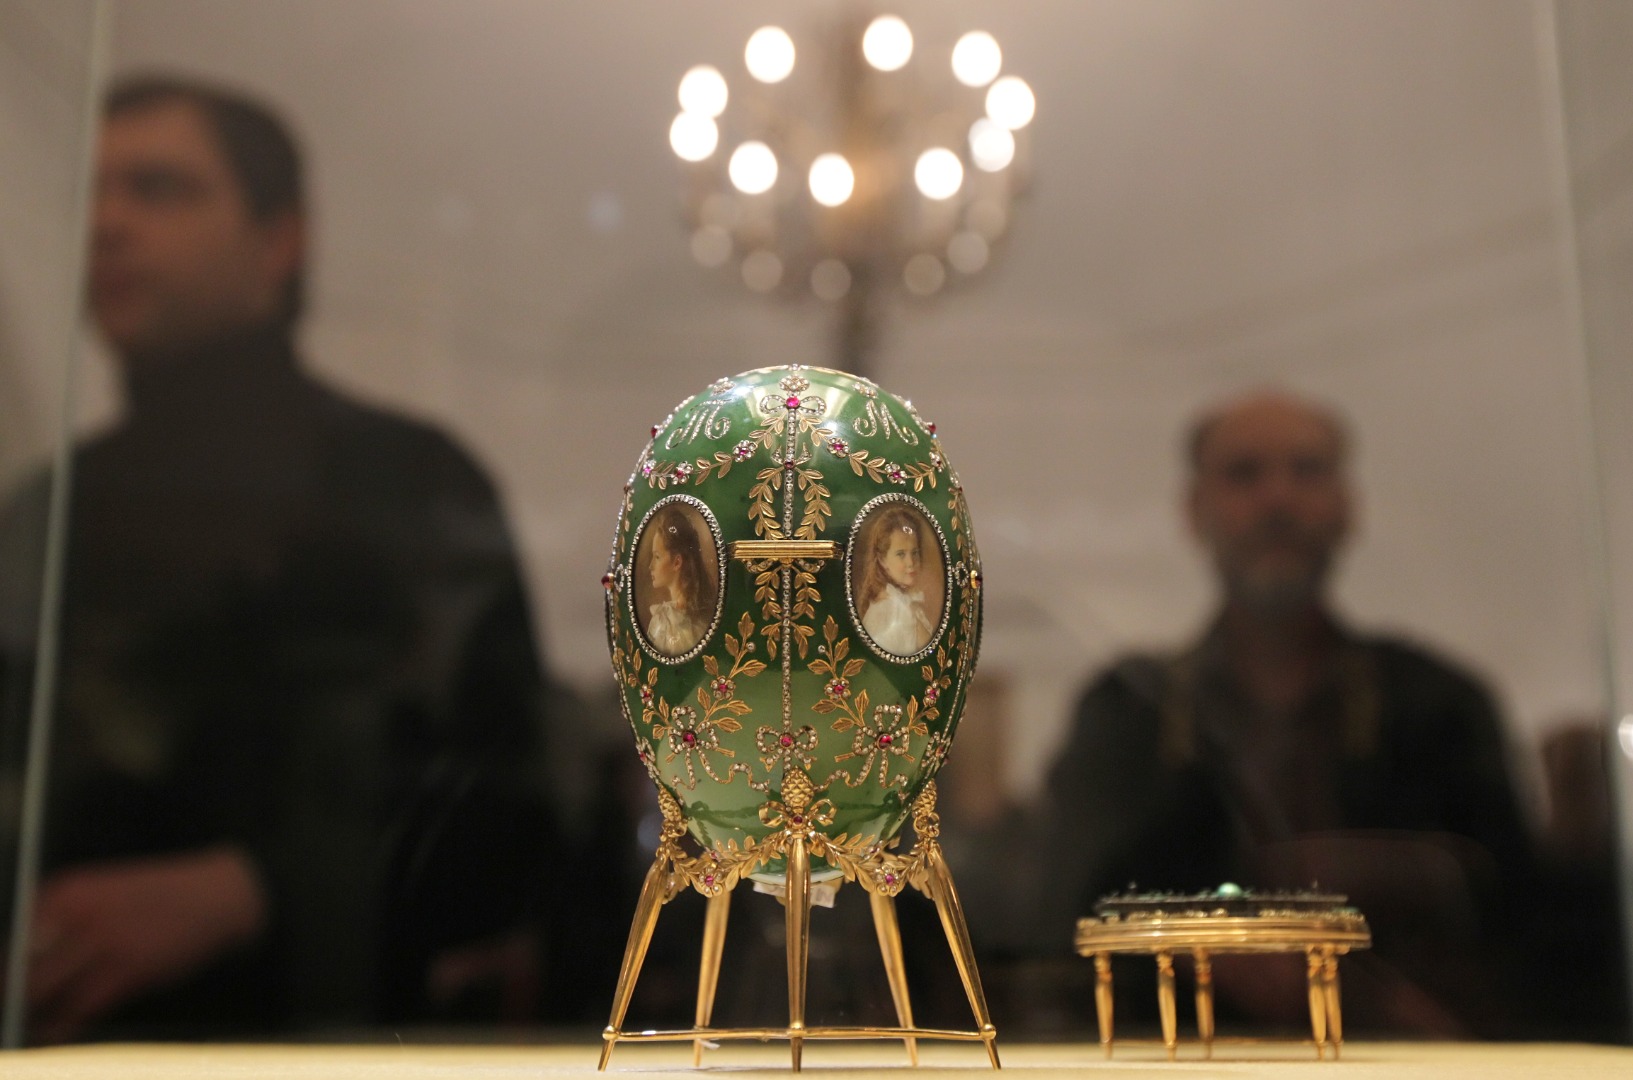 Rus oligarka ait yatta “Faberge” yumurtası bulundu